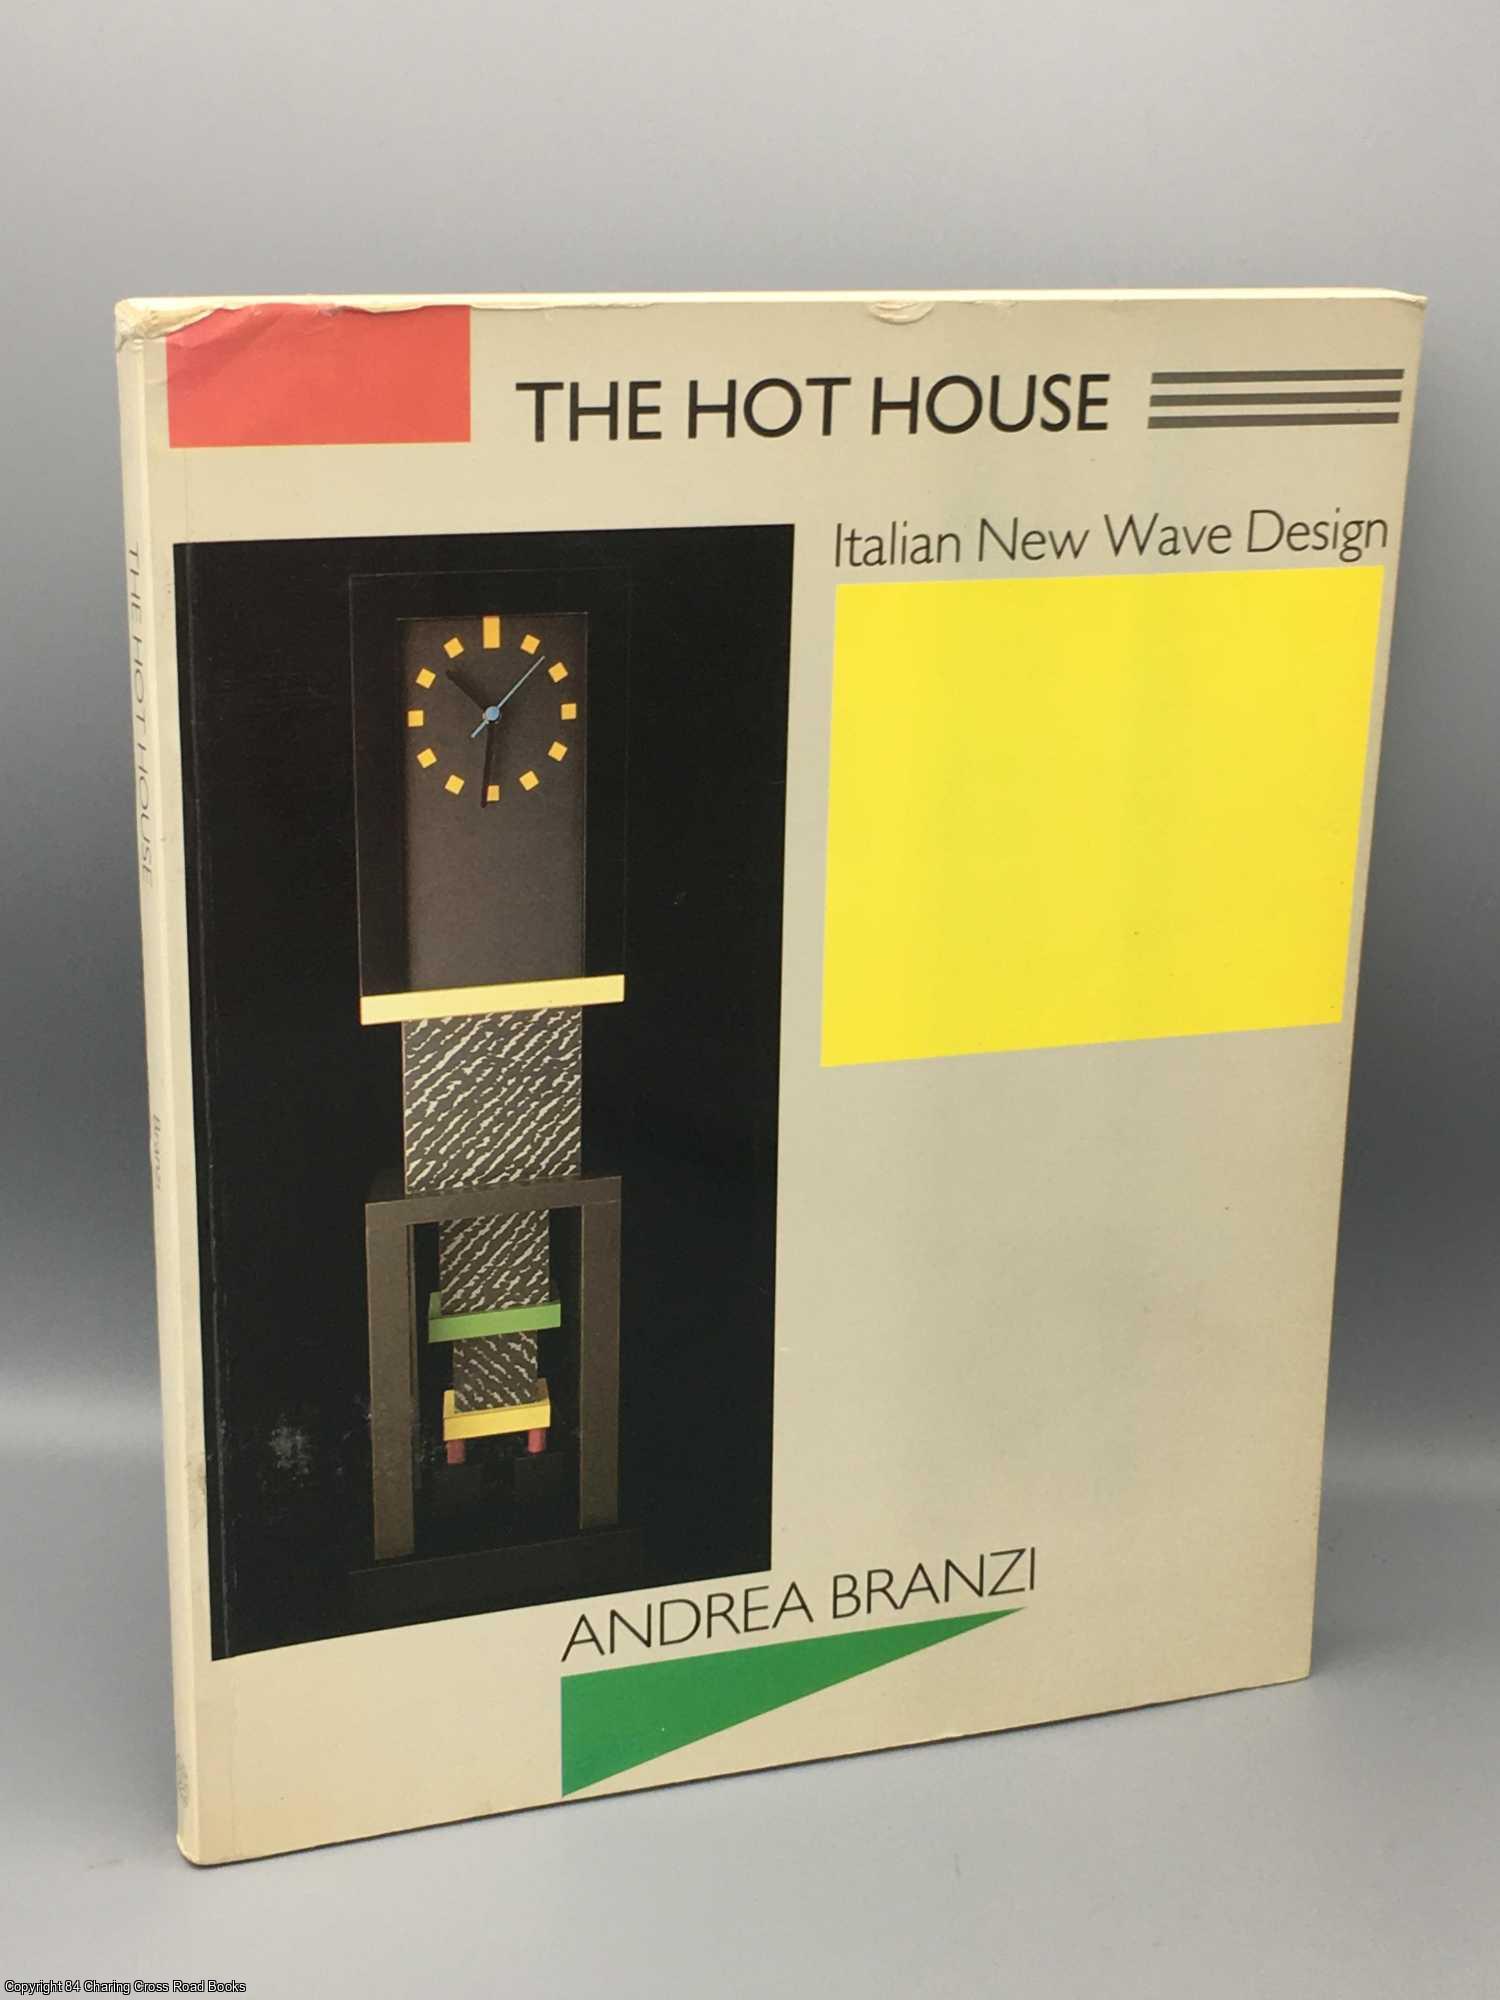 Branzi, Andrea - The Hot House: Italian New Wave Design